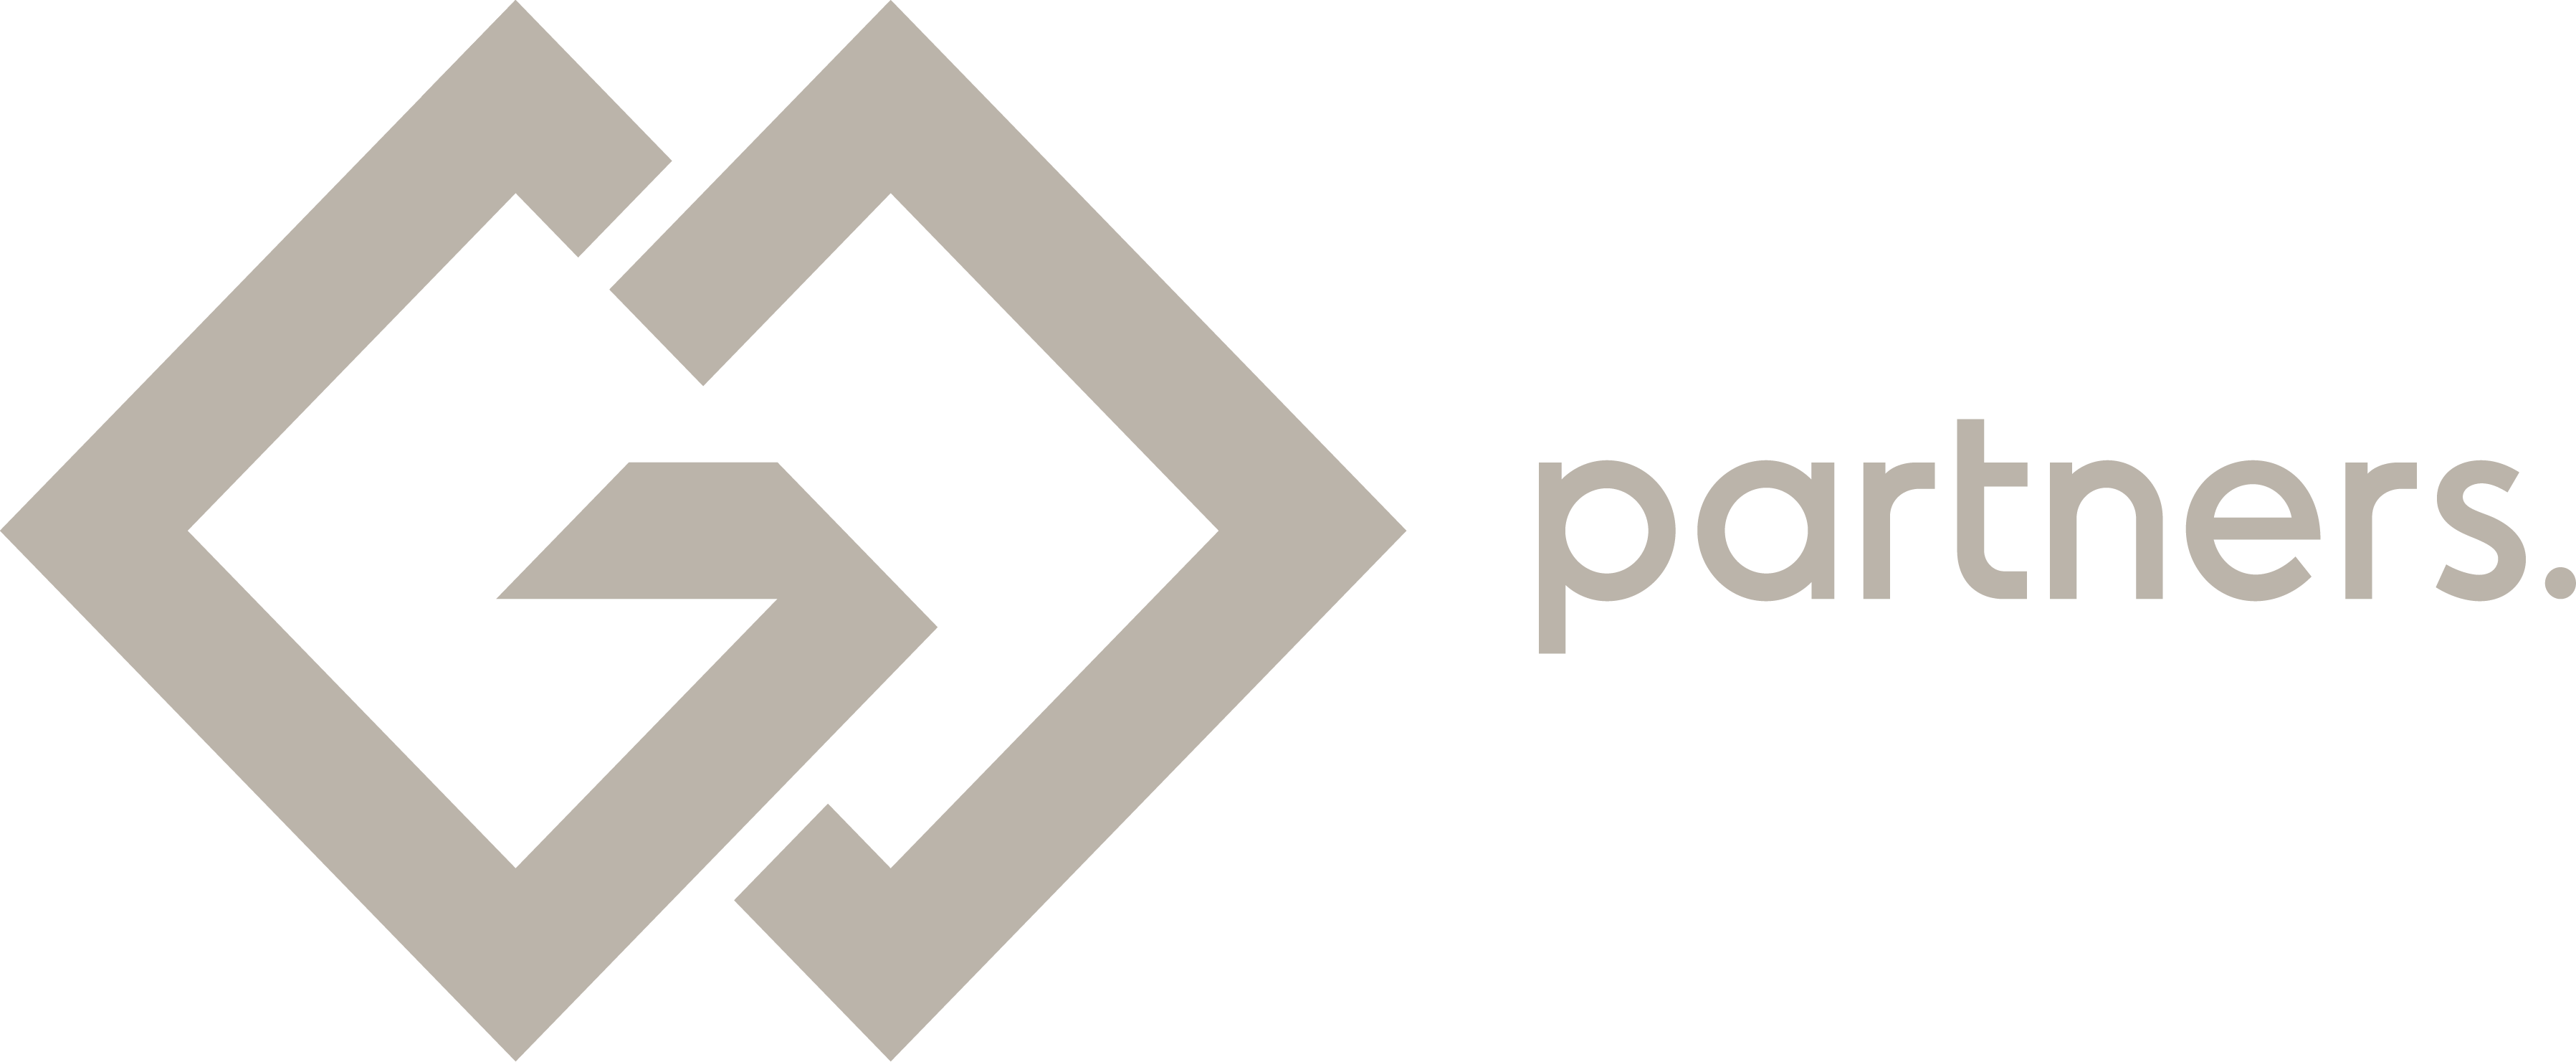 Go_Partners_logo